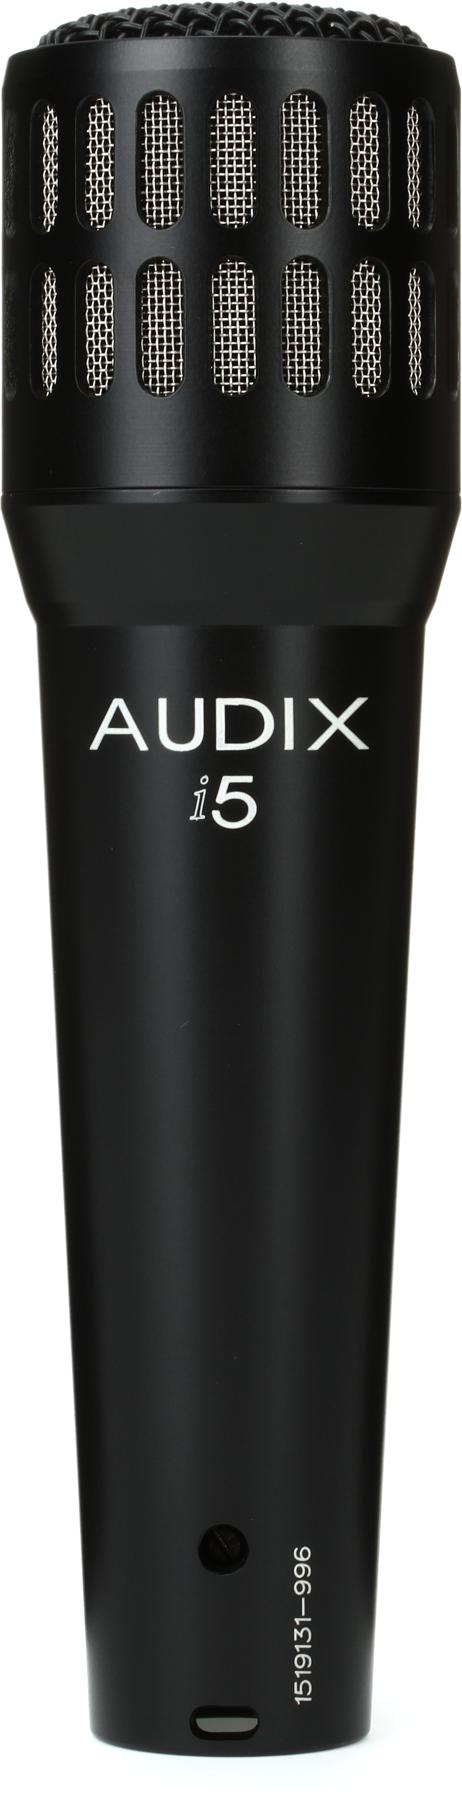 4. Audix i5